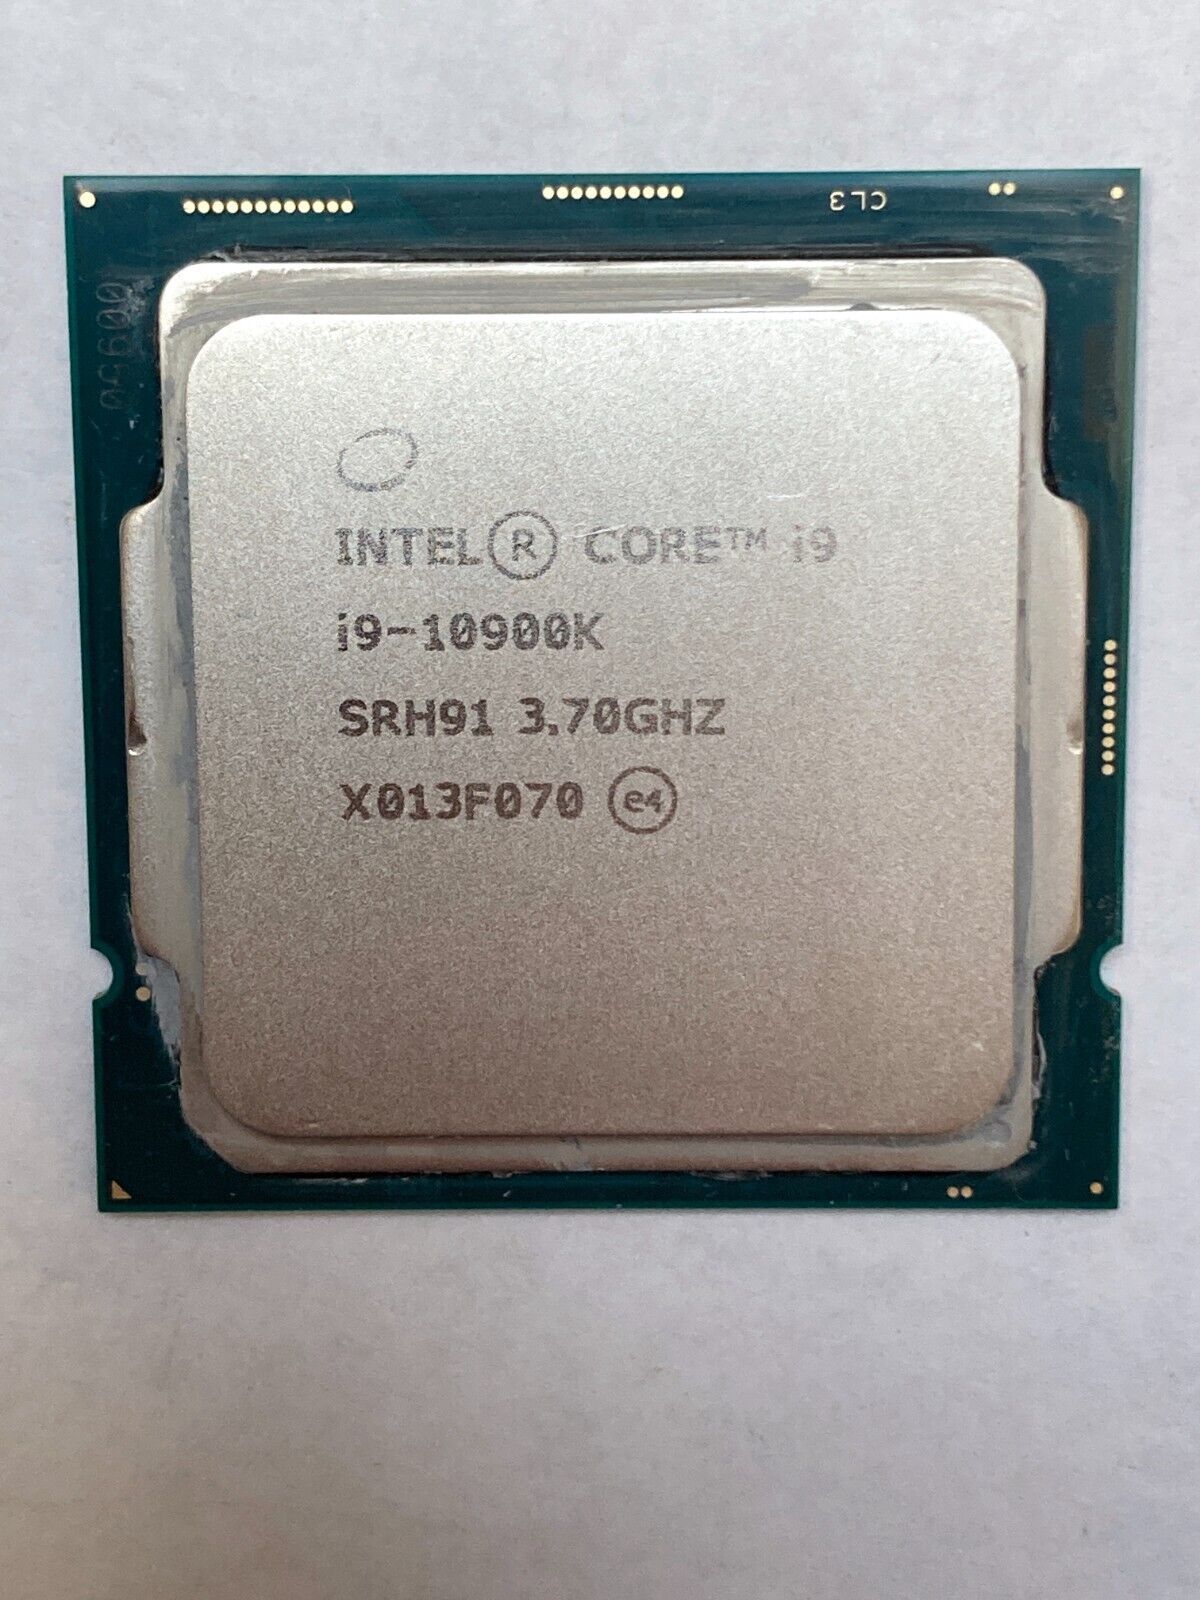 Intel Core i9-10900K Processor